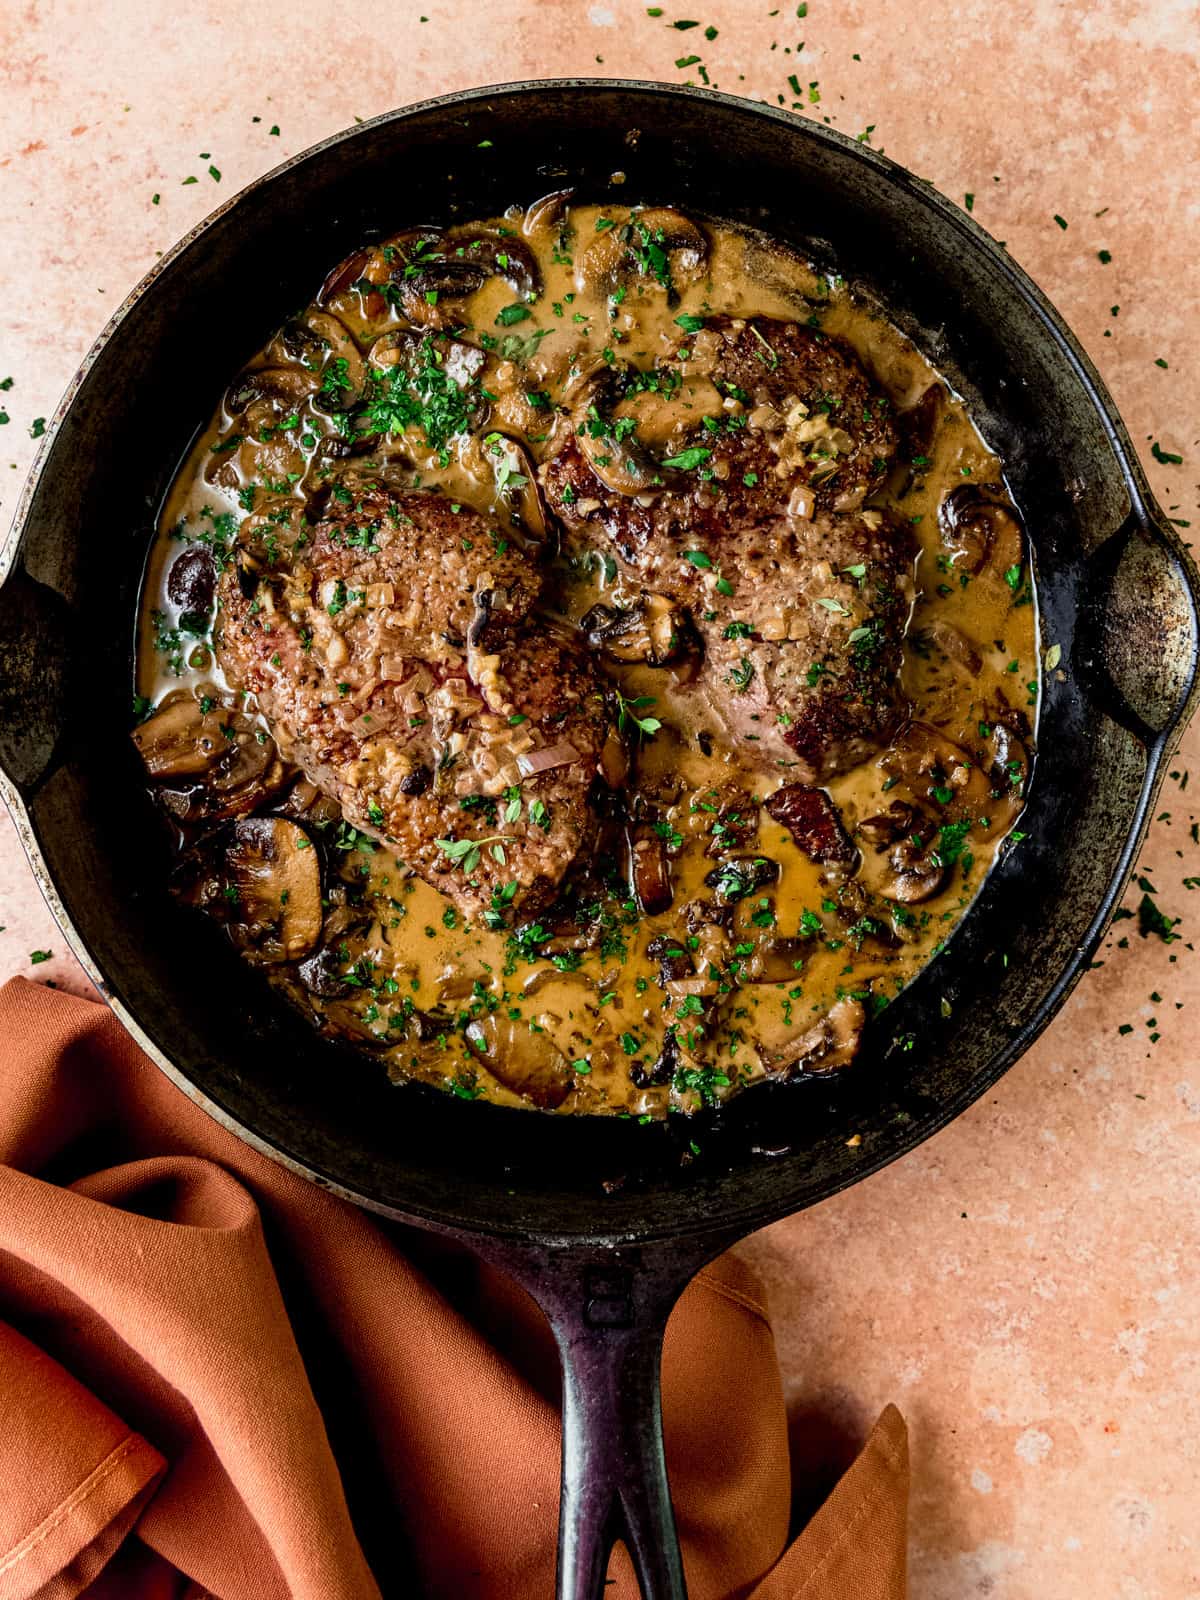 Steak marsala with mushrooms in a creamy marsala wine sauce with herbs.